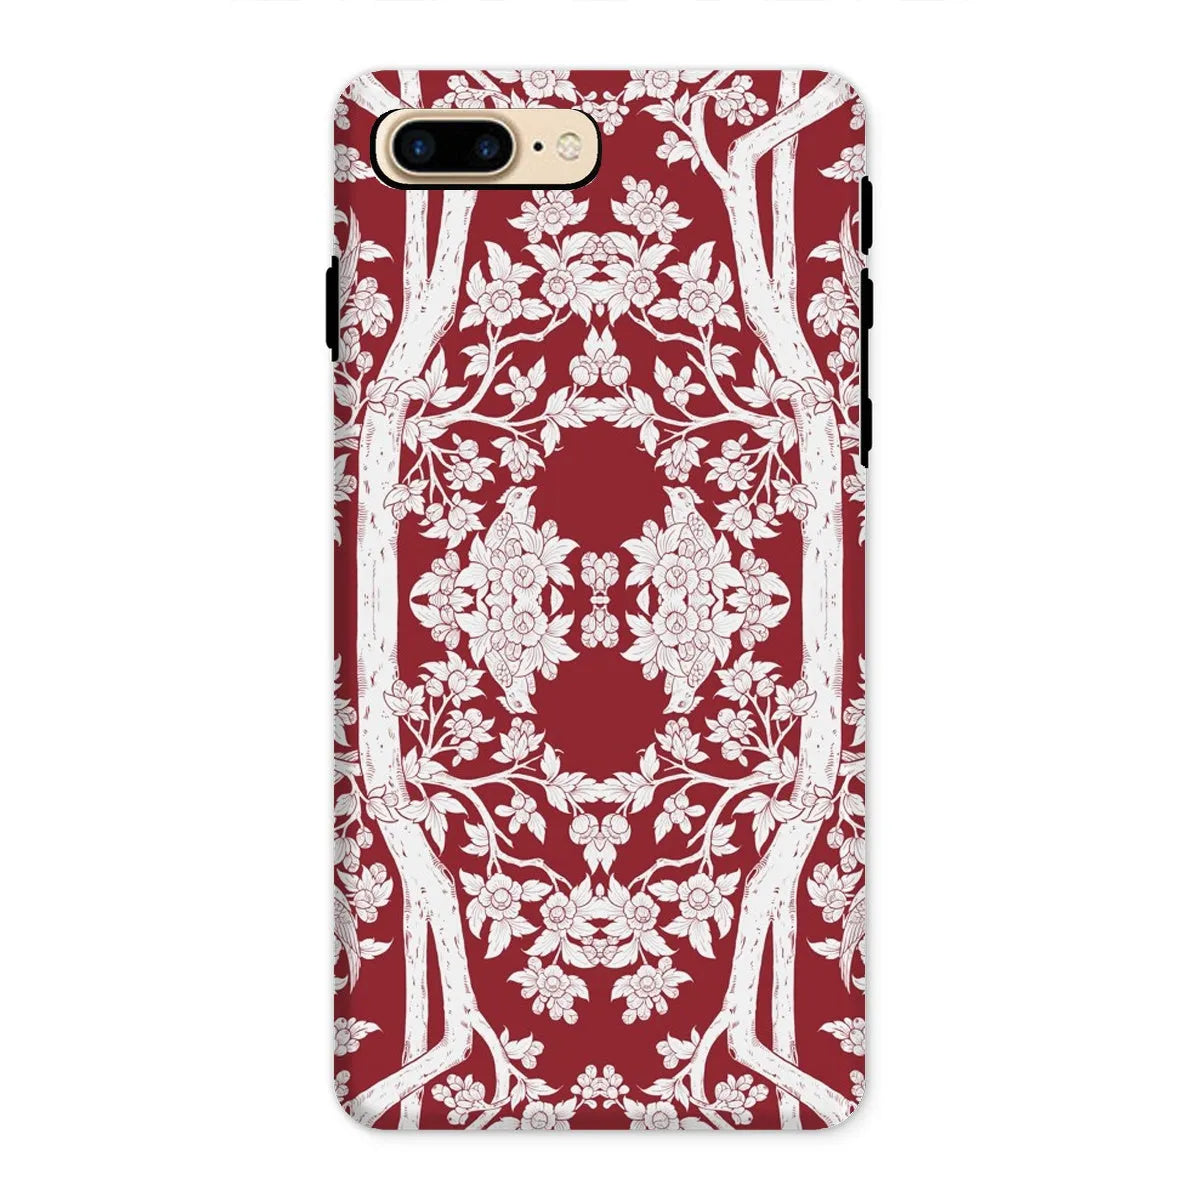 Aviary Red Aesthetic Pattern Art Phone Case - Iphone 8 Plus / Matte - Mobile Phone Cases - Aesthetic Art